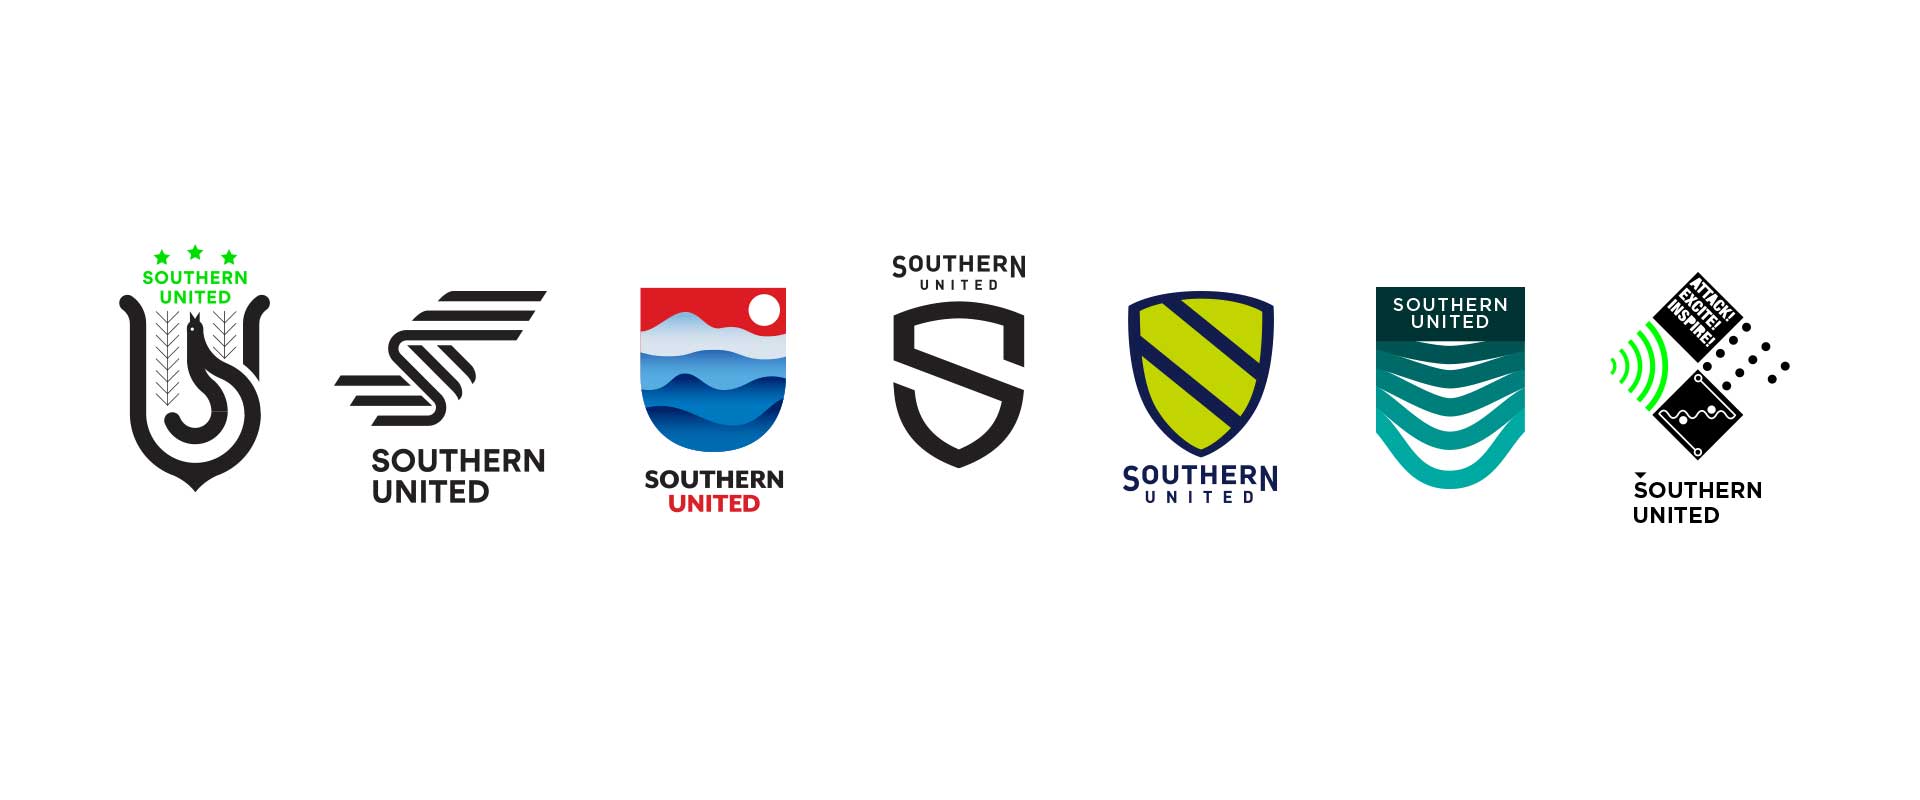 Sports Brand Identity Design by Branding Agency Percept in Sydney for a professional football club in Australia, image K